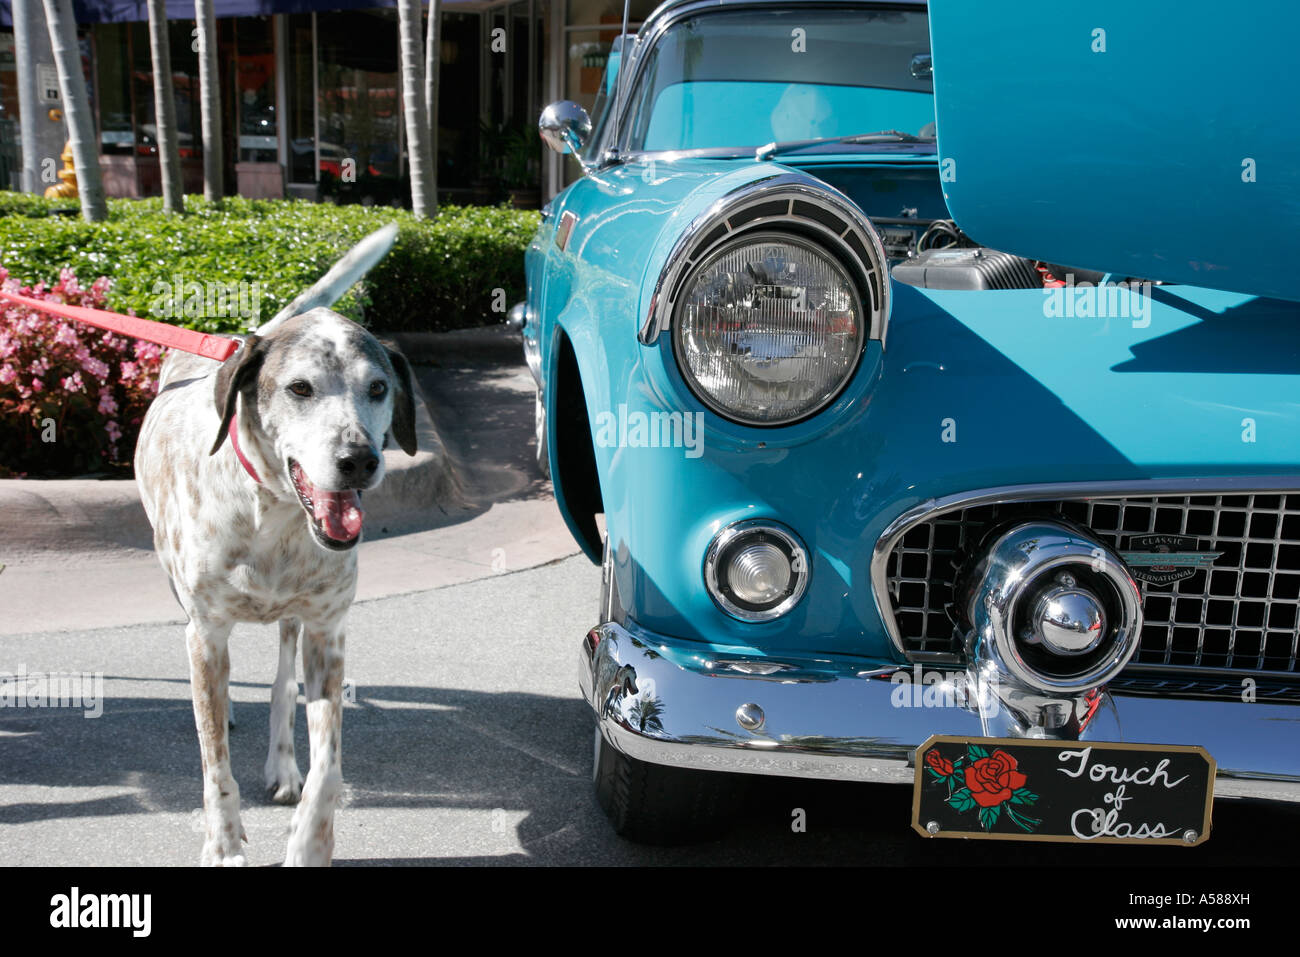 Miami Florida,Coral Gables,Classic car cars Show,collectors,nostalgia nostalgic retro,investment,restore,hobby,Americana,1956 Ford Thunderbird,dog dog Stock Photo